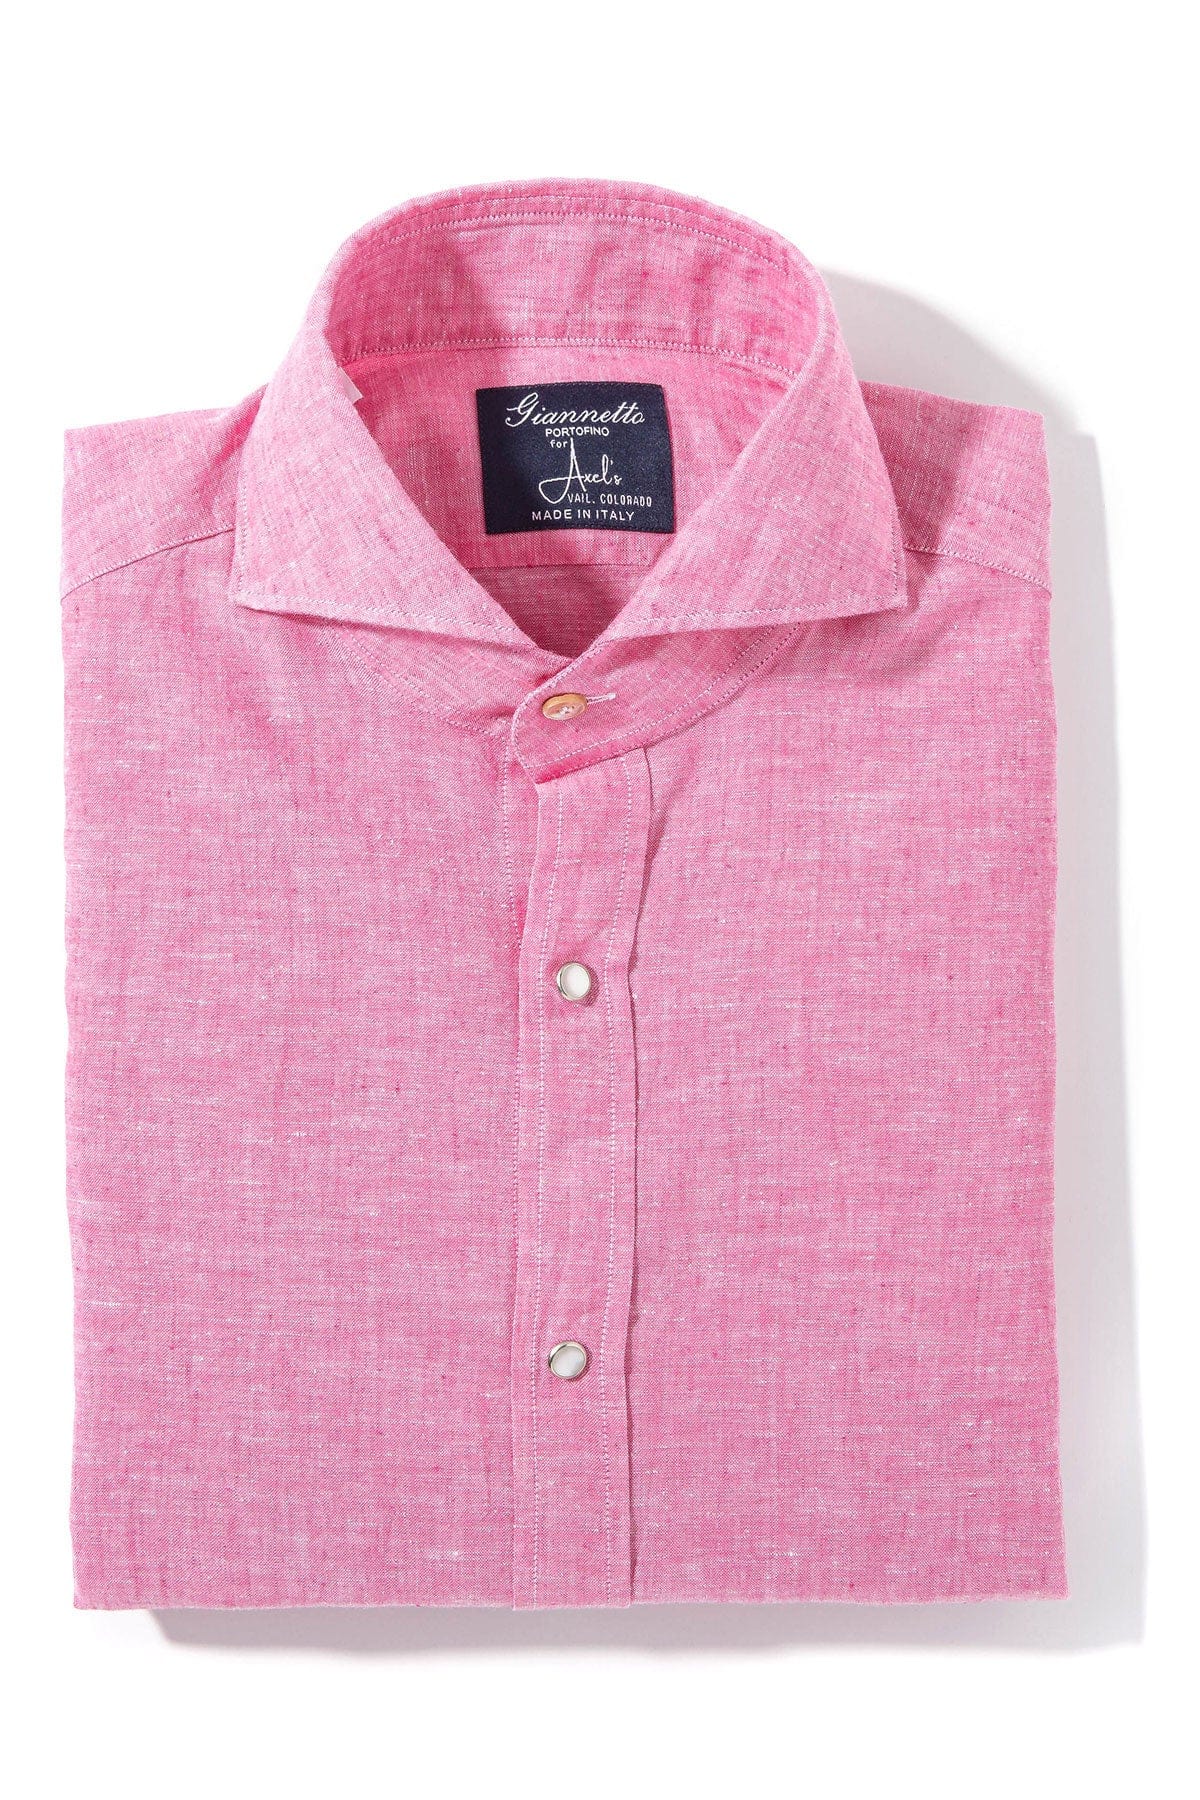 Mach Linen Cotton Snap Shirt in Pink - AXEL'S